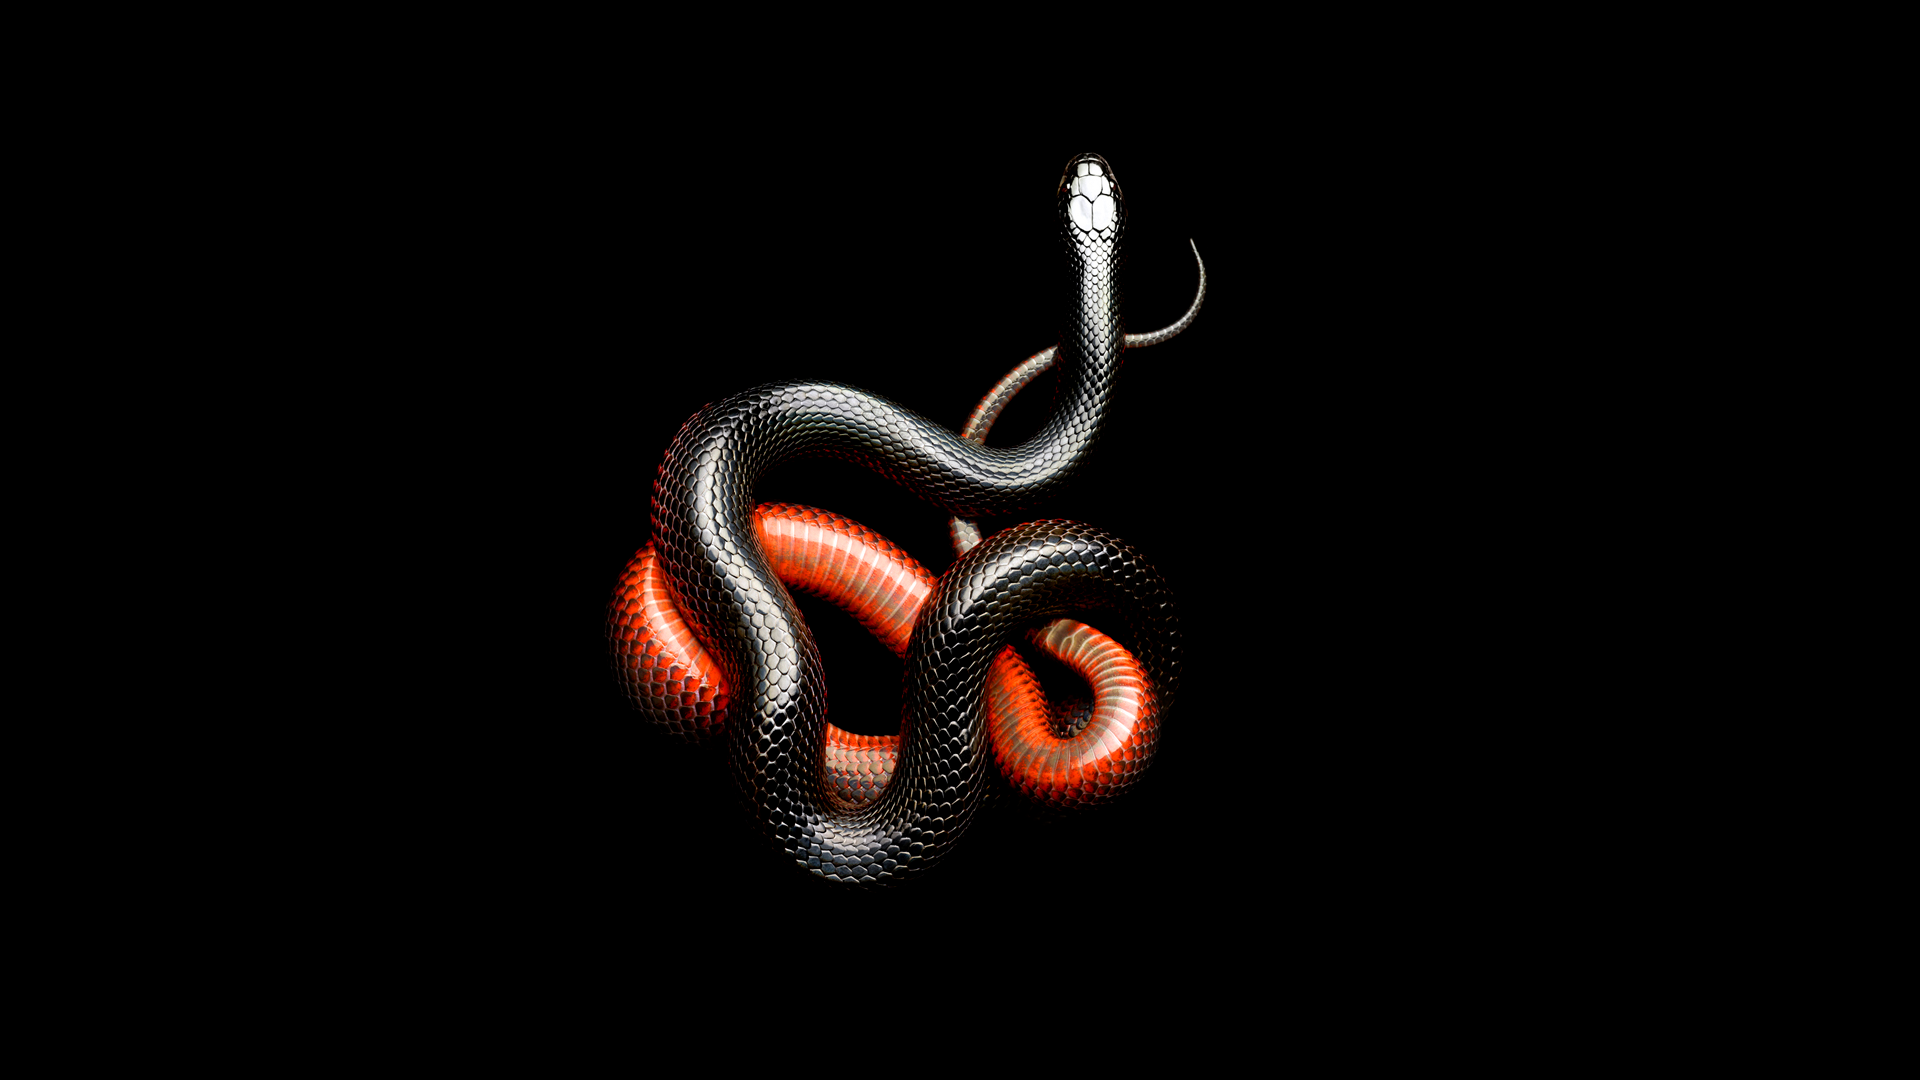 General 1920x1080 snake black dark animals mamba black background reptiles simple background